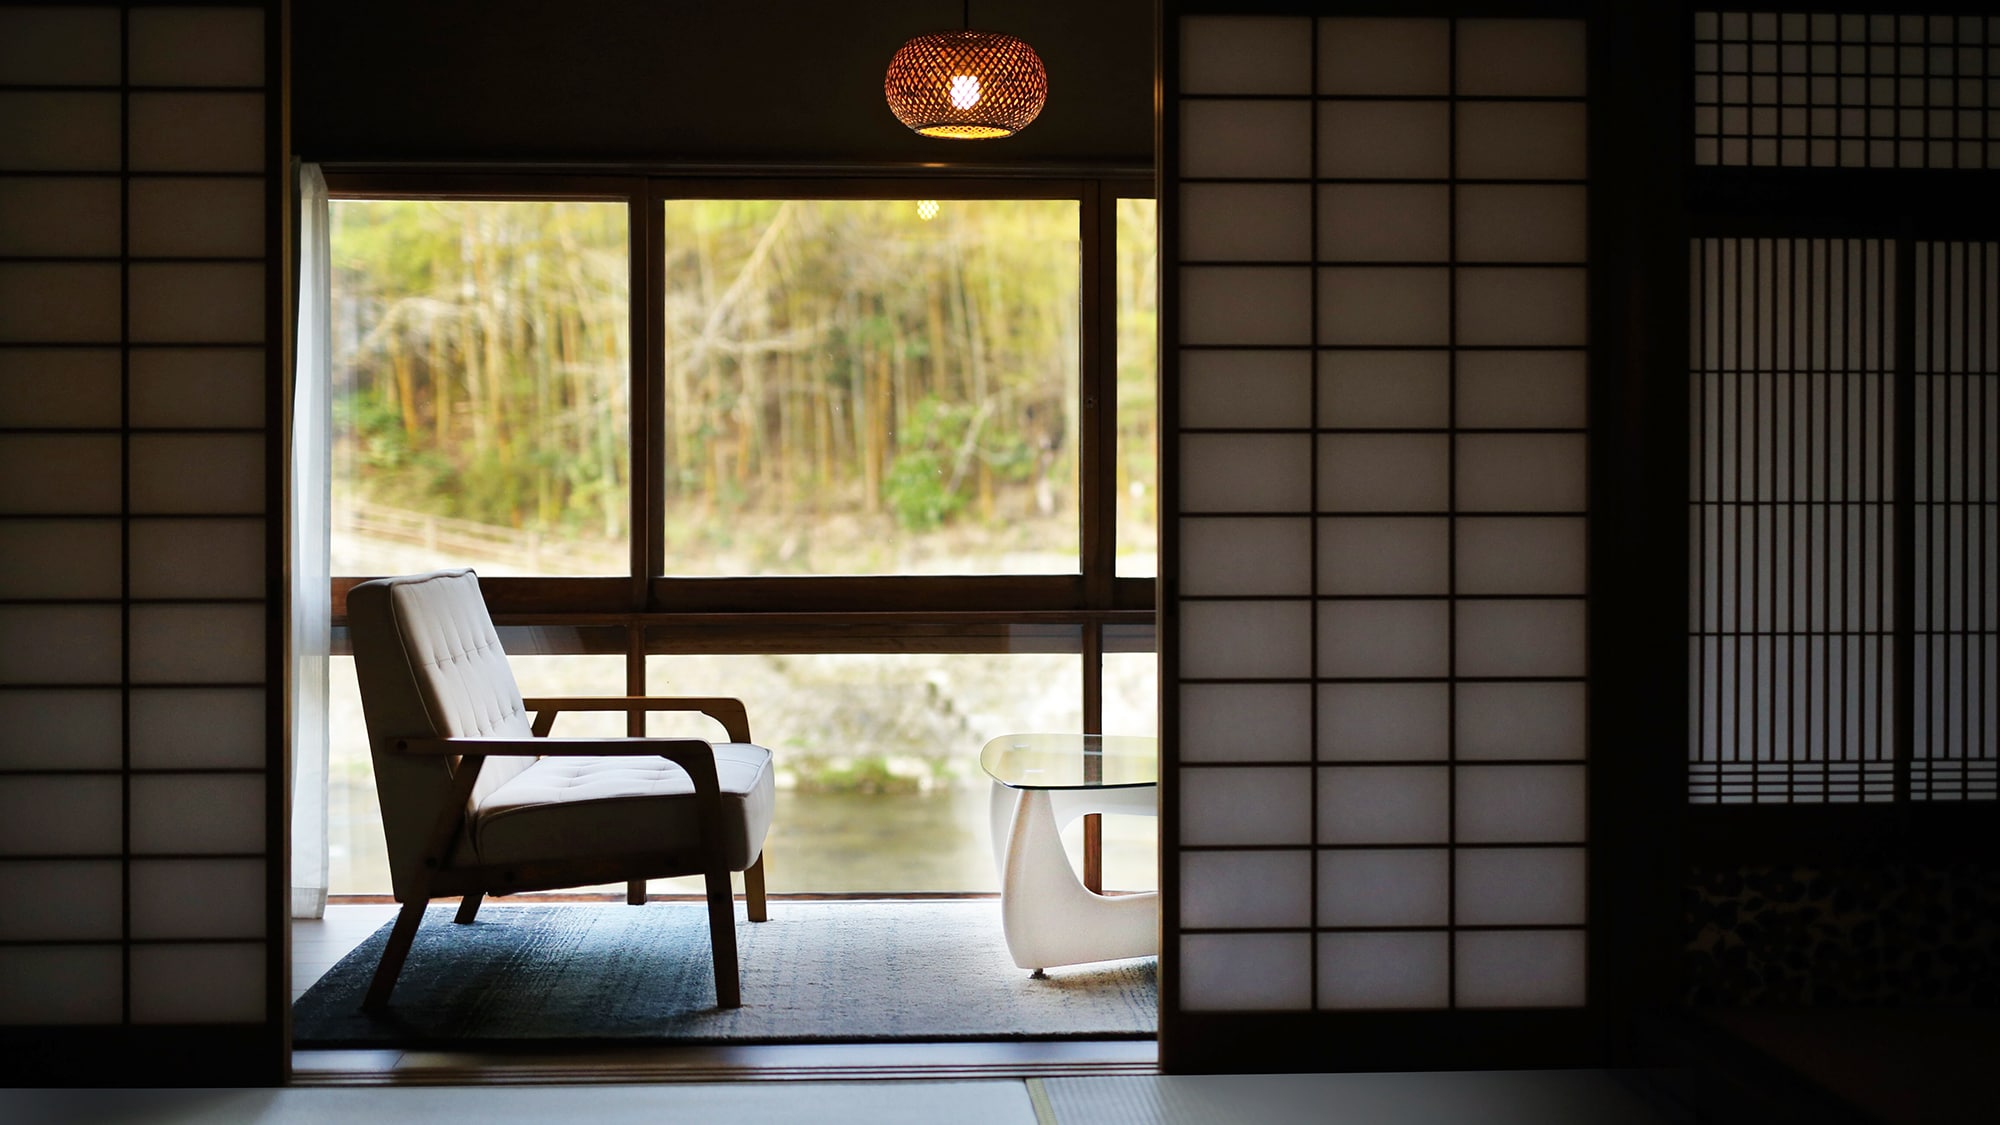 Annex Japanese-style room 8 tatami mats